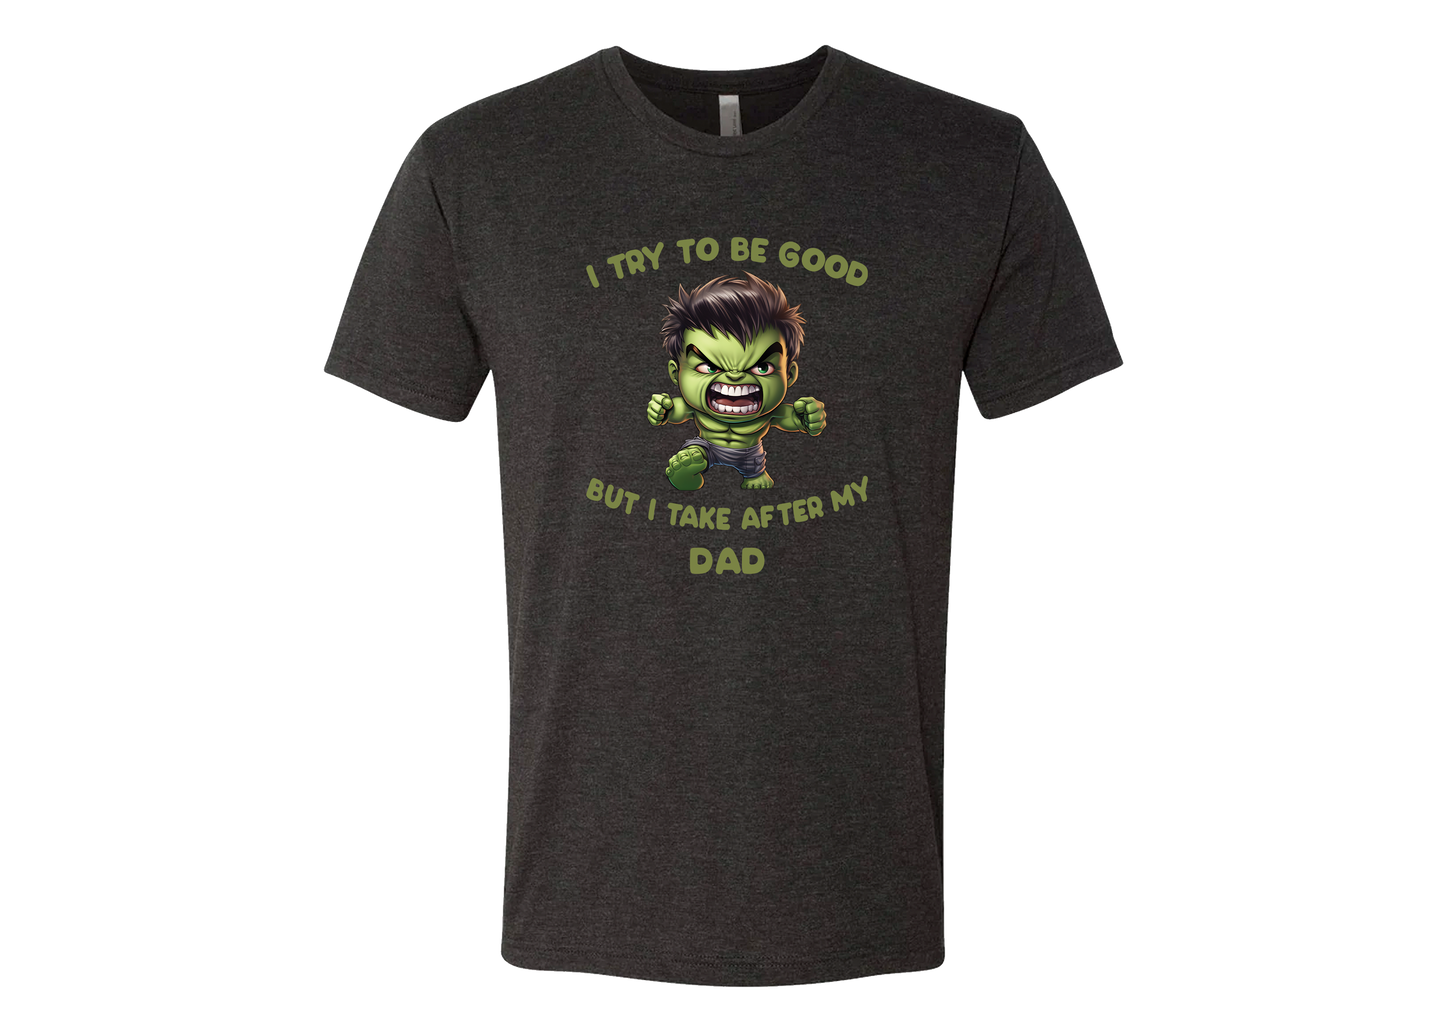 Try to be good - Boy Hulk